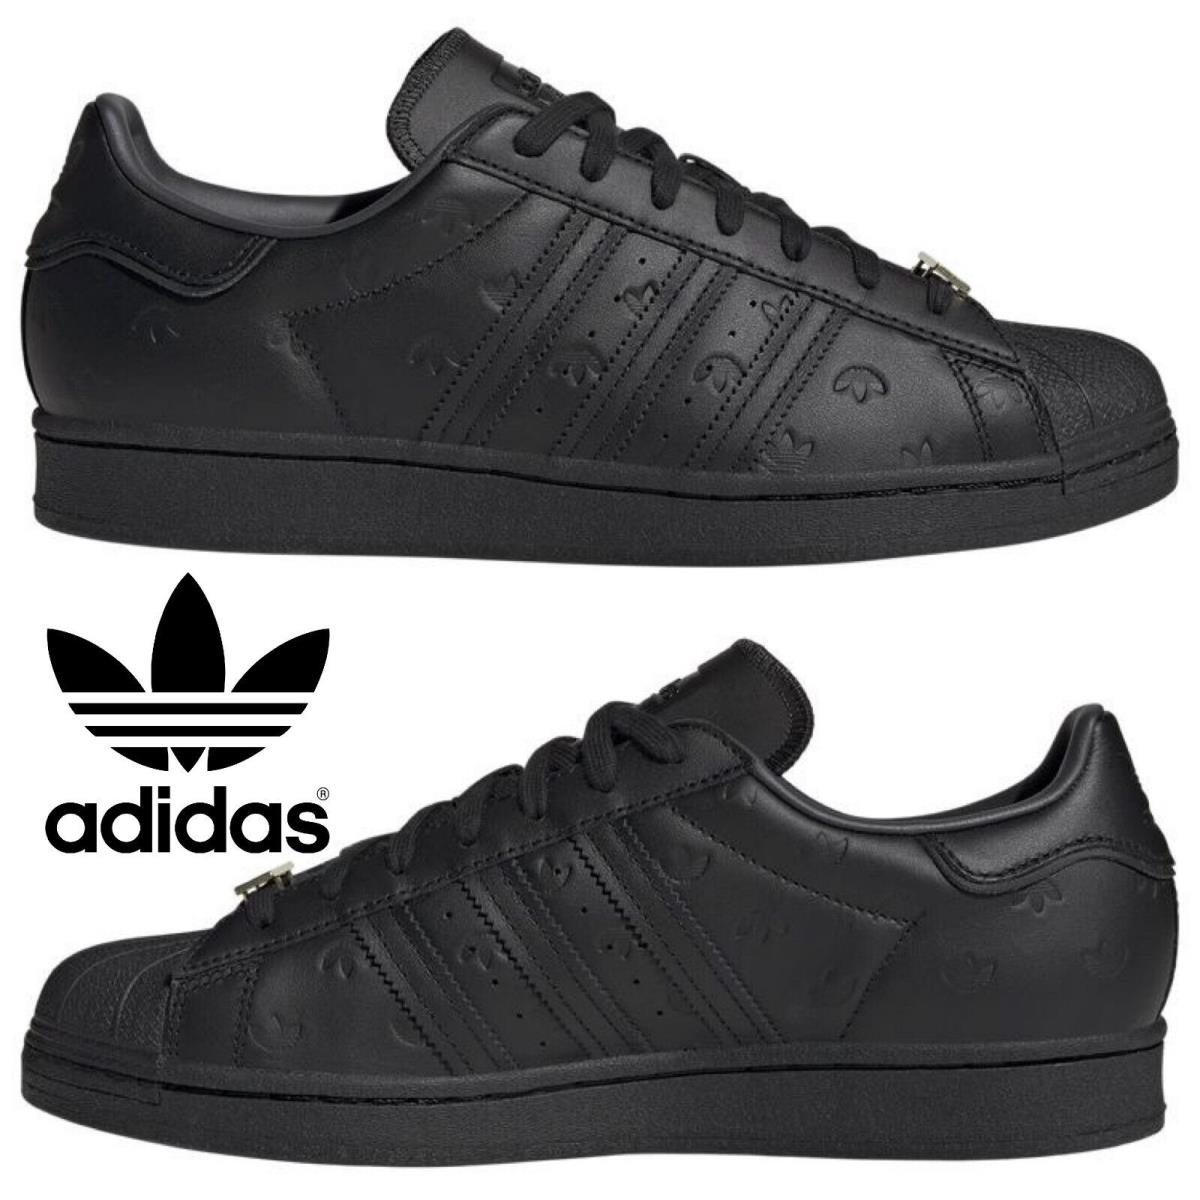 Adidas Originals Superstar Men`s Sneakers Comfort Sport Casual Shoe Red Black - Black , Core Black/Core Black/Carbon Manufacturer